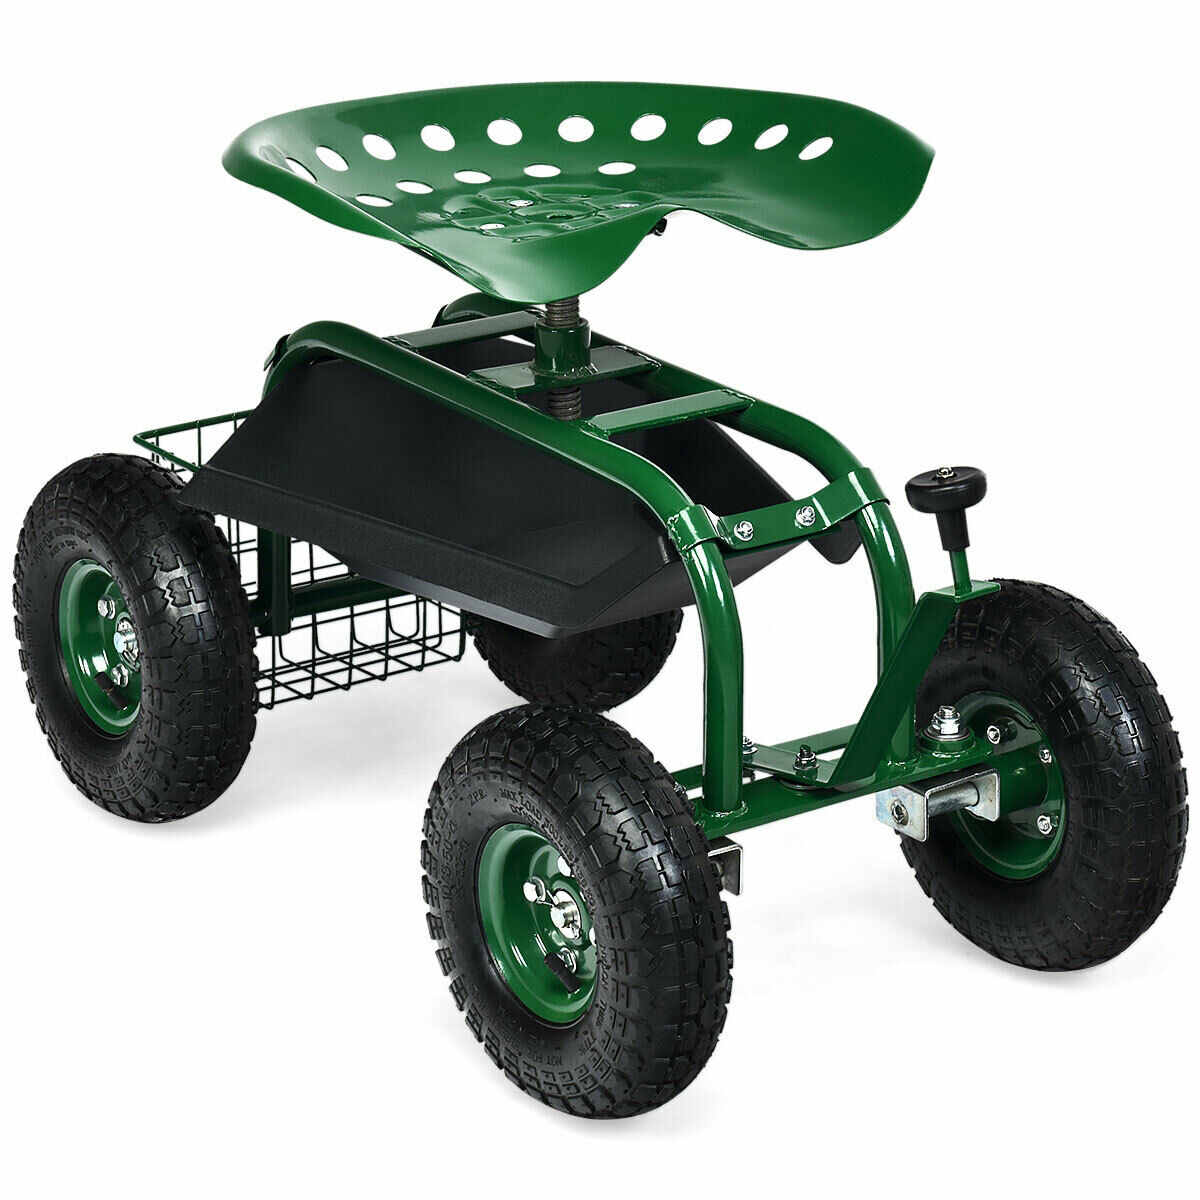 Costway Garden Cart Patio Wagon Rolling Work Seat w/ Tool Tray Basket Planting Green